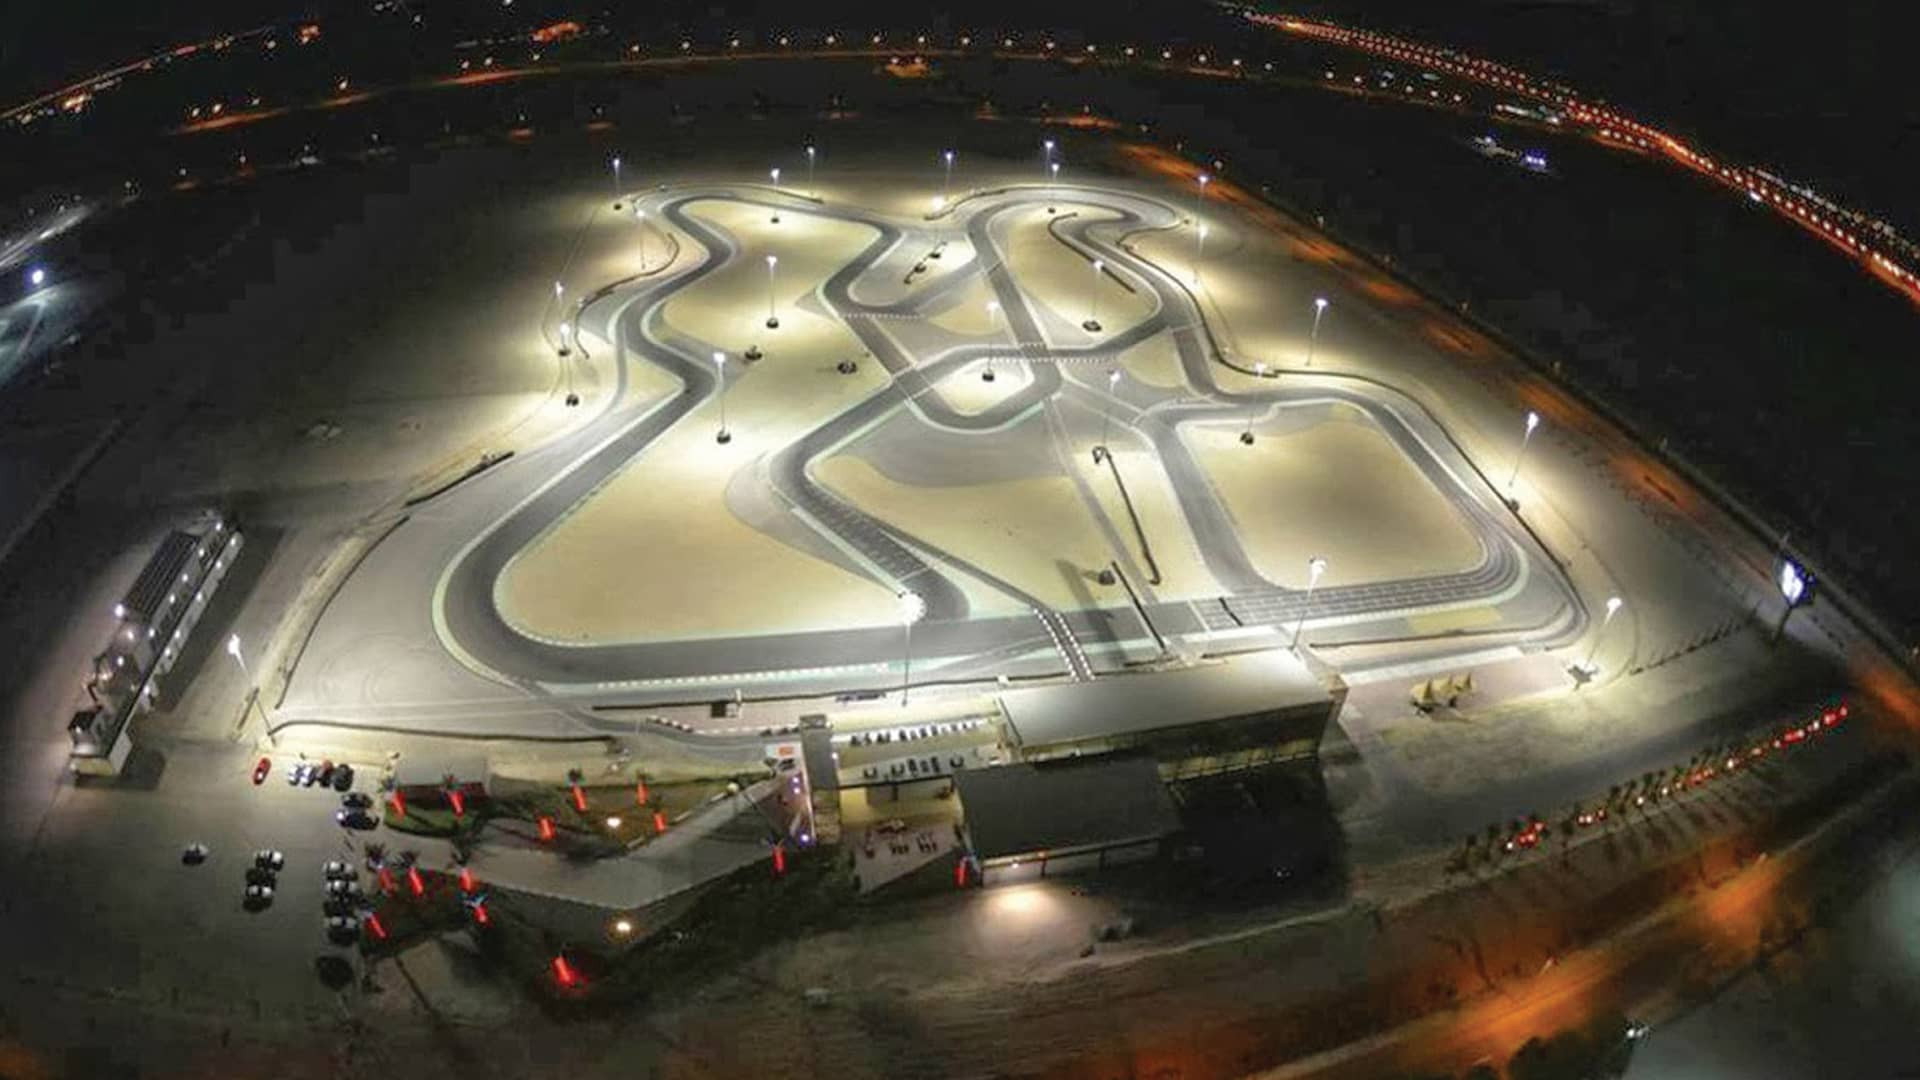 Bahrain International Kart Circuit in Bahrain, Middle East | Karting - Rated 4.3